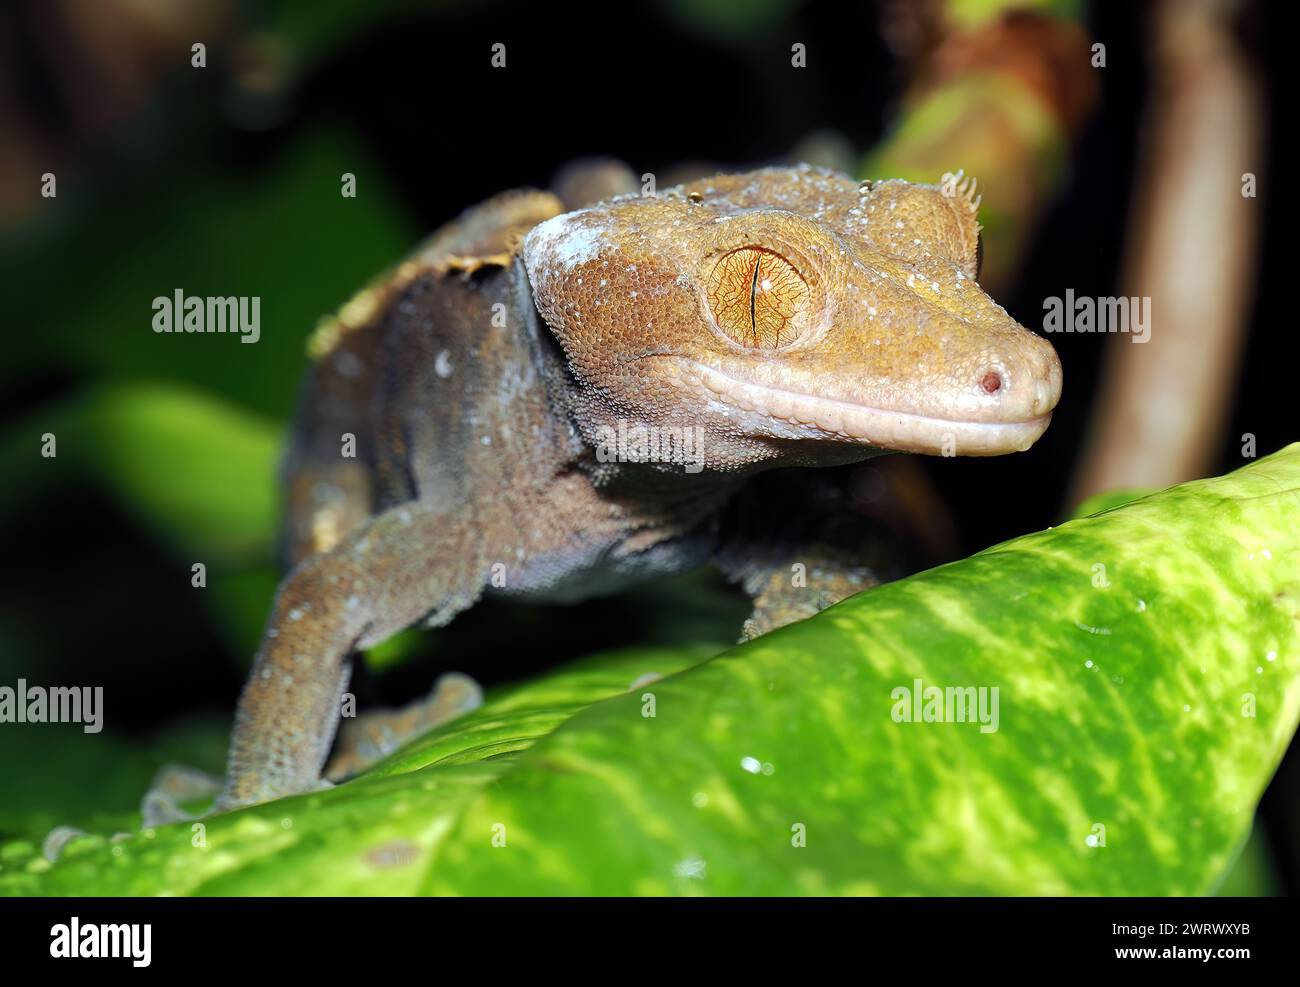 Geco crestato, geco ciglia, Kronengecko, Gecko à crête, Correlophus ciliatus, vitorlásgekkó Foto Stock